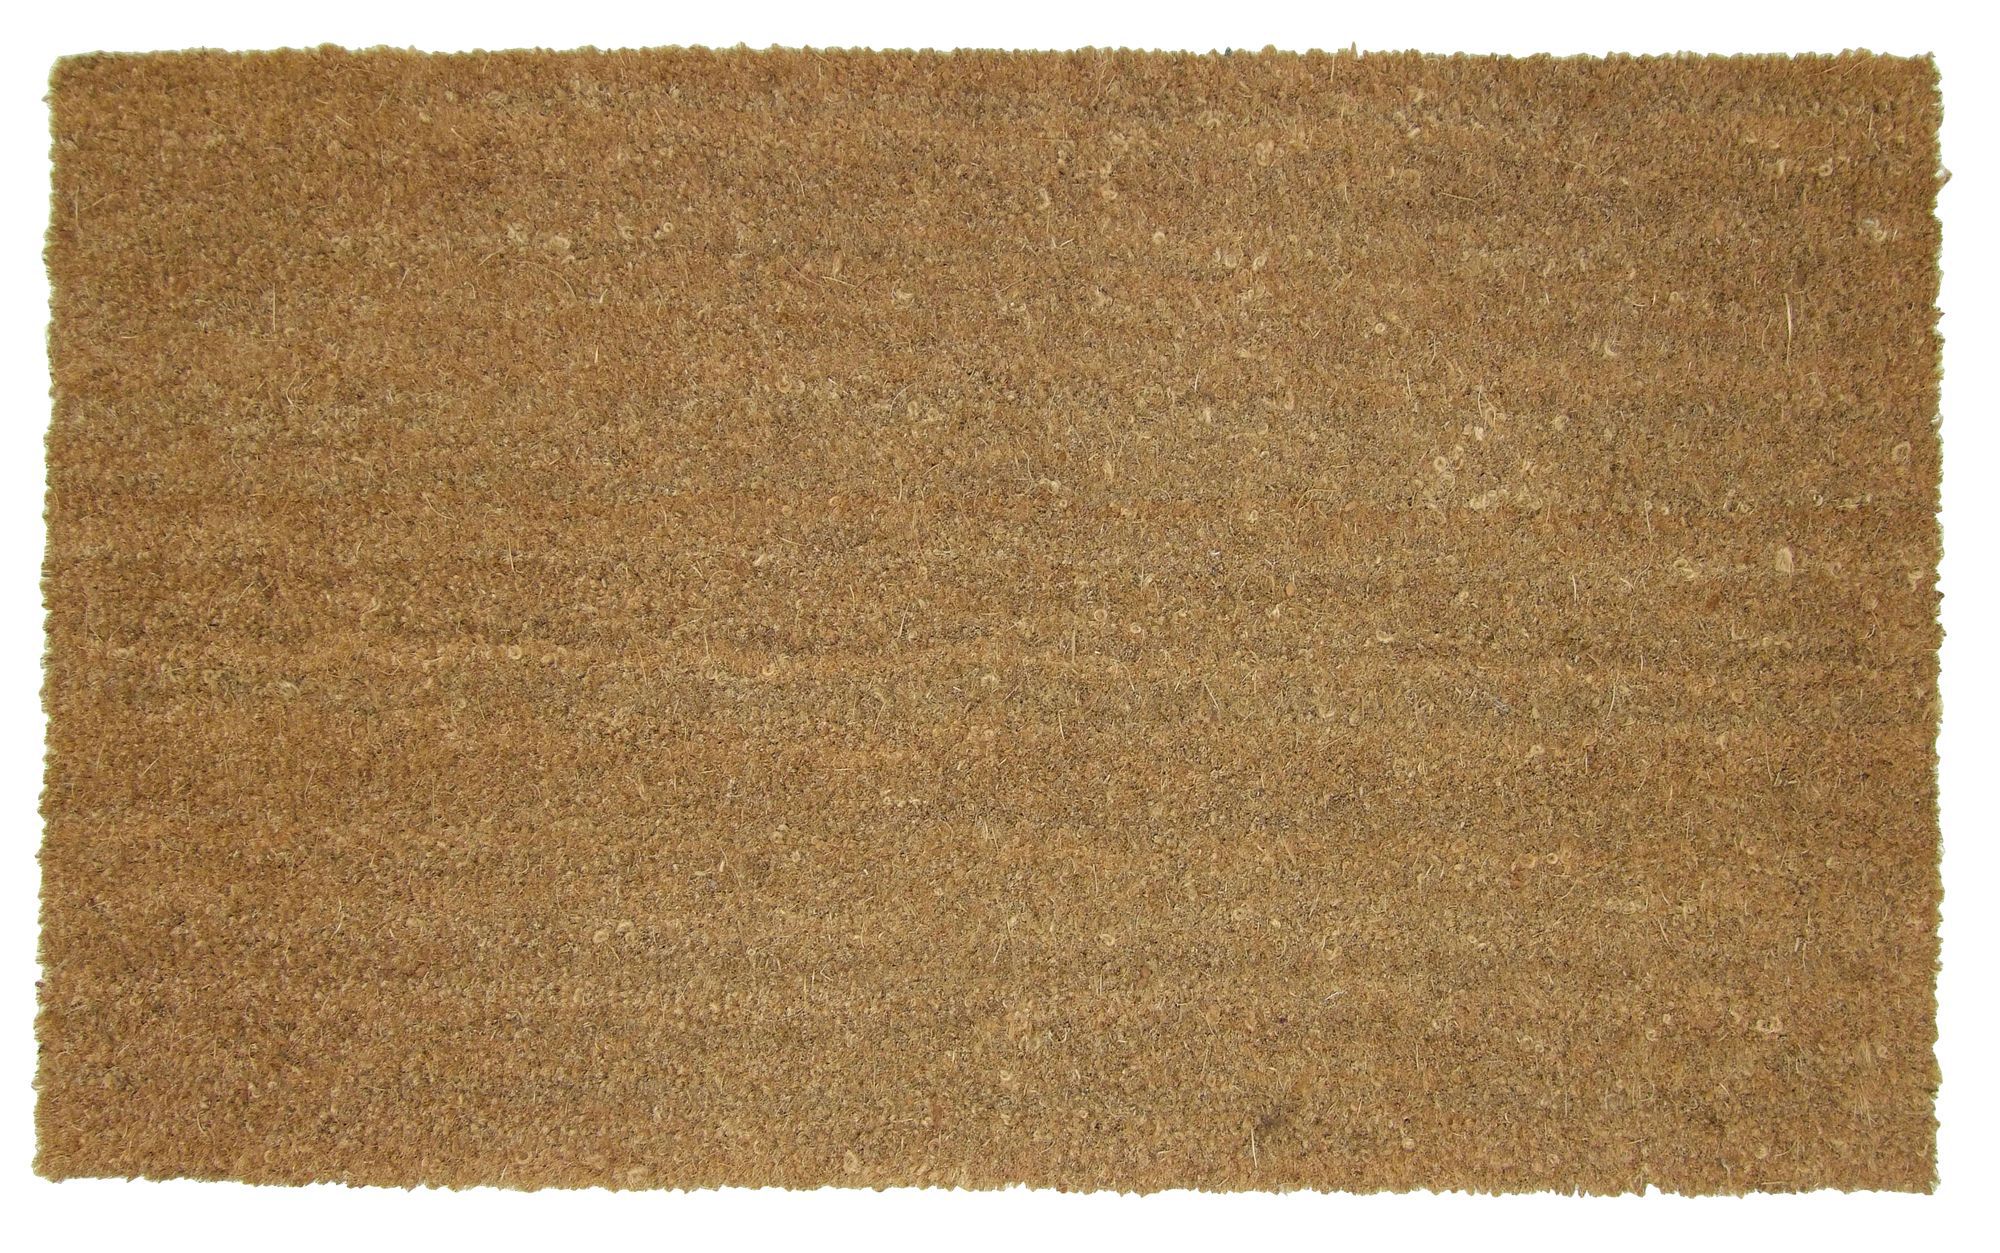 Diall Natural Rectangular Door mat, 110cm x 80cm